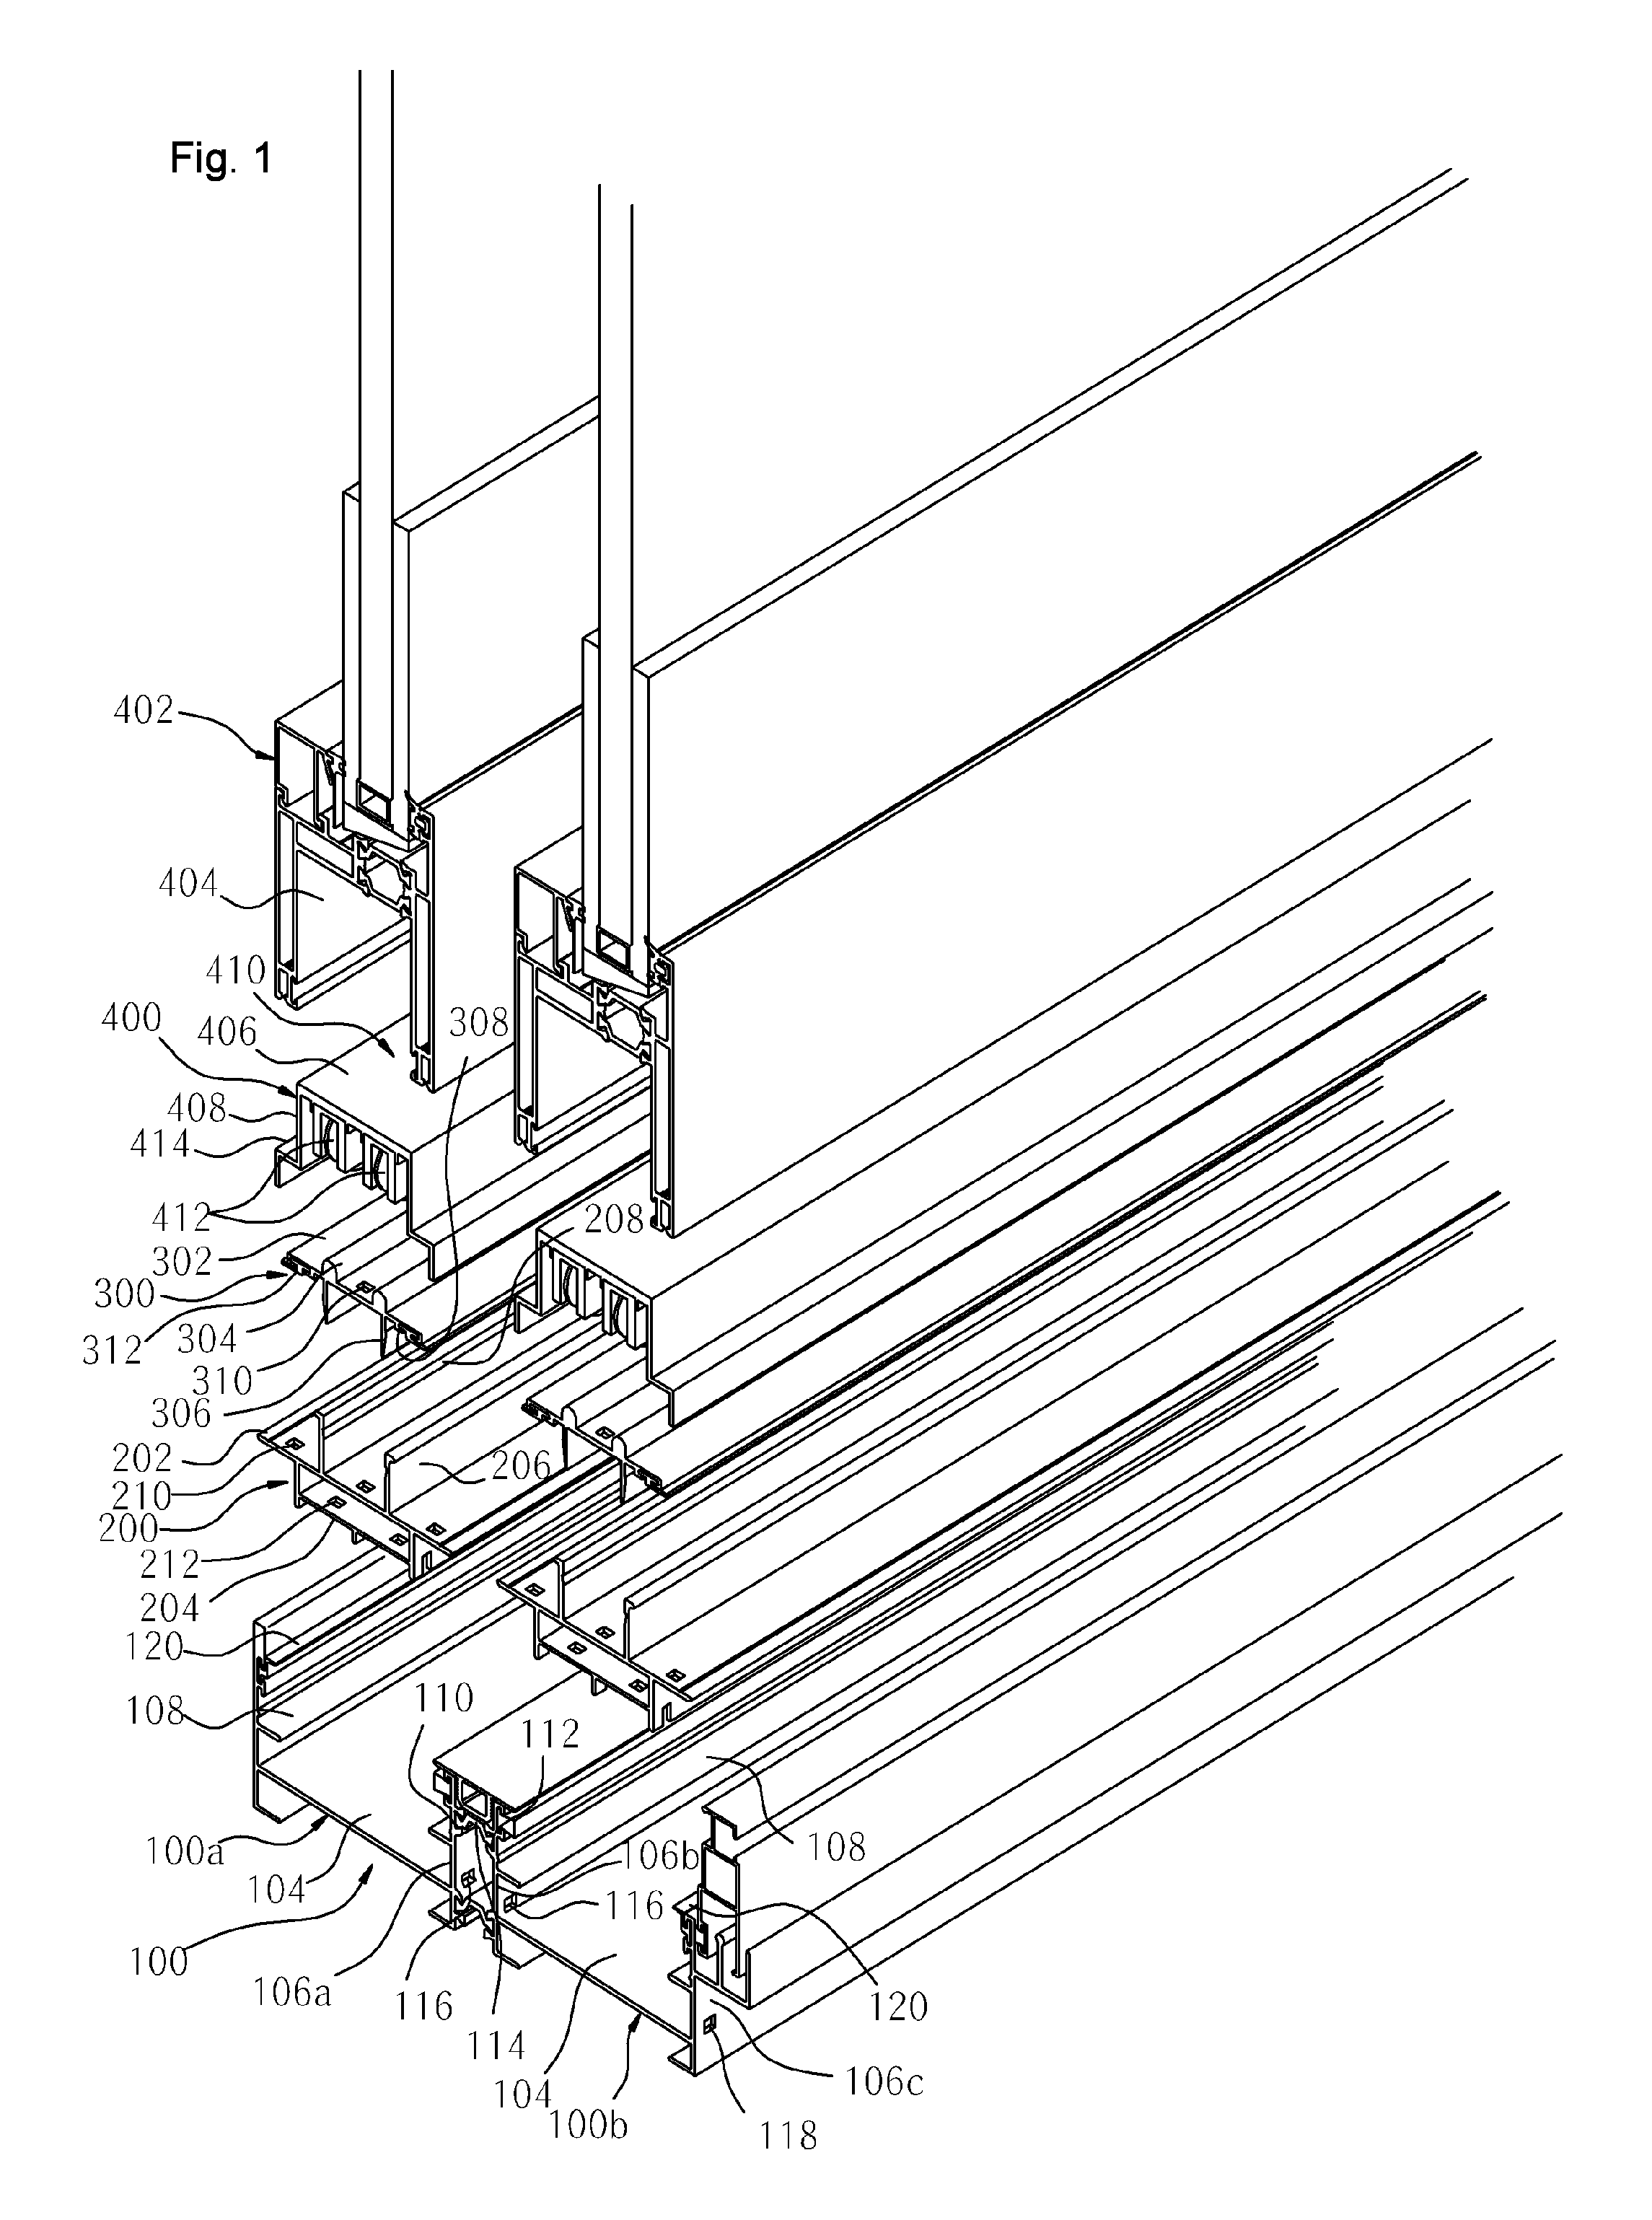 Modular window apparatus with liquid drainage ability